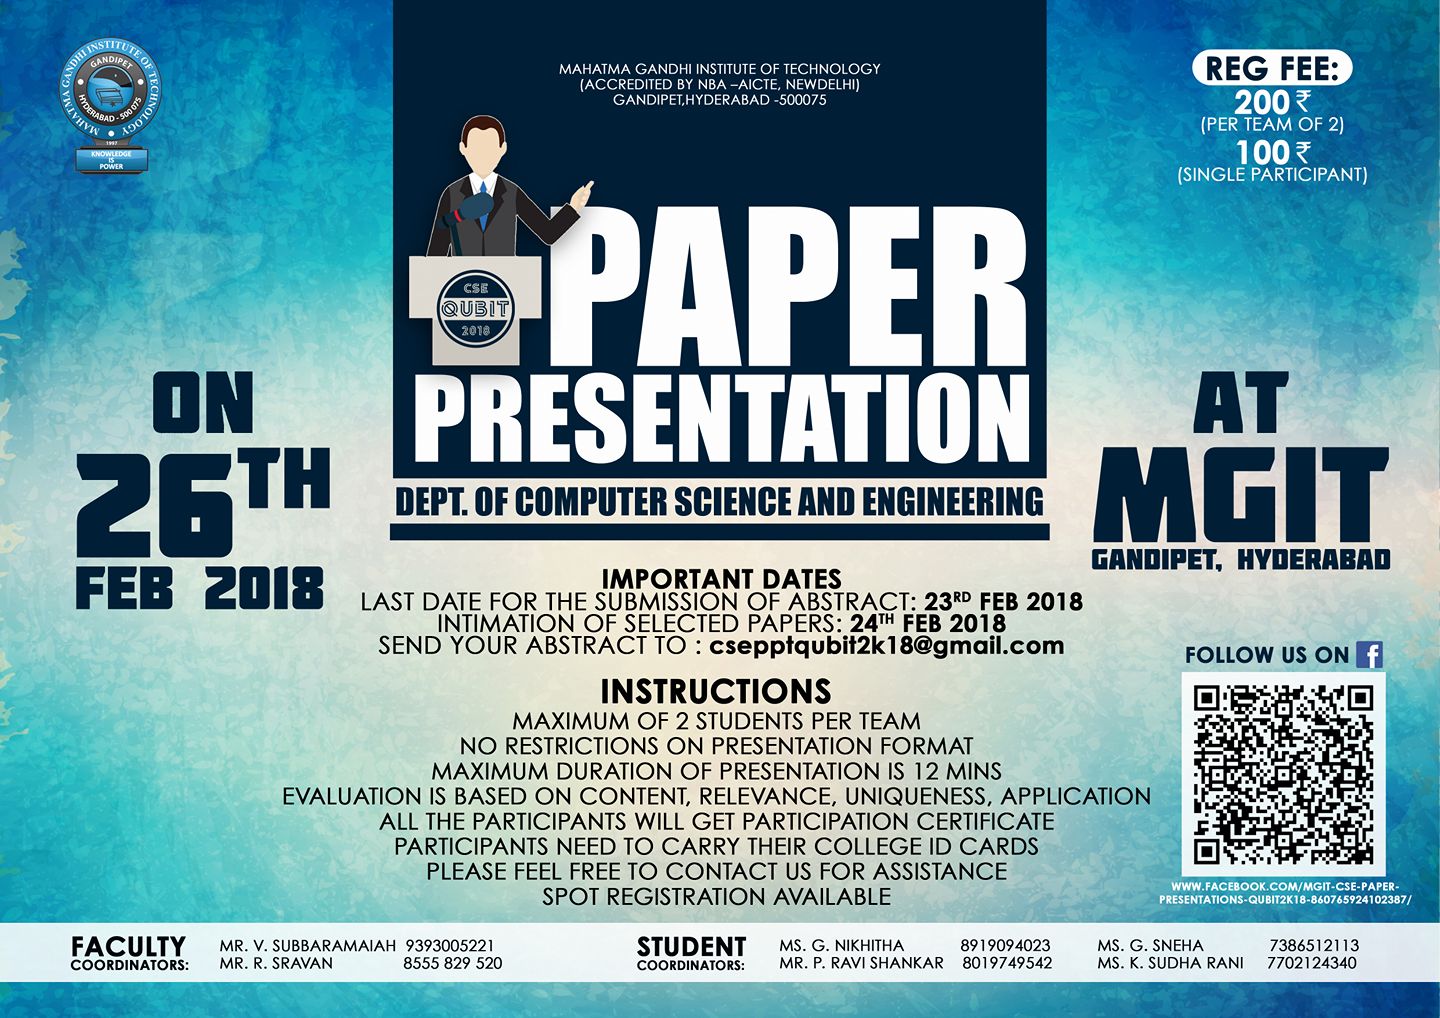 paper presentation in delhi